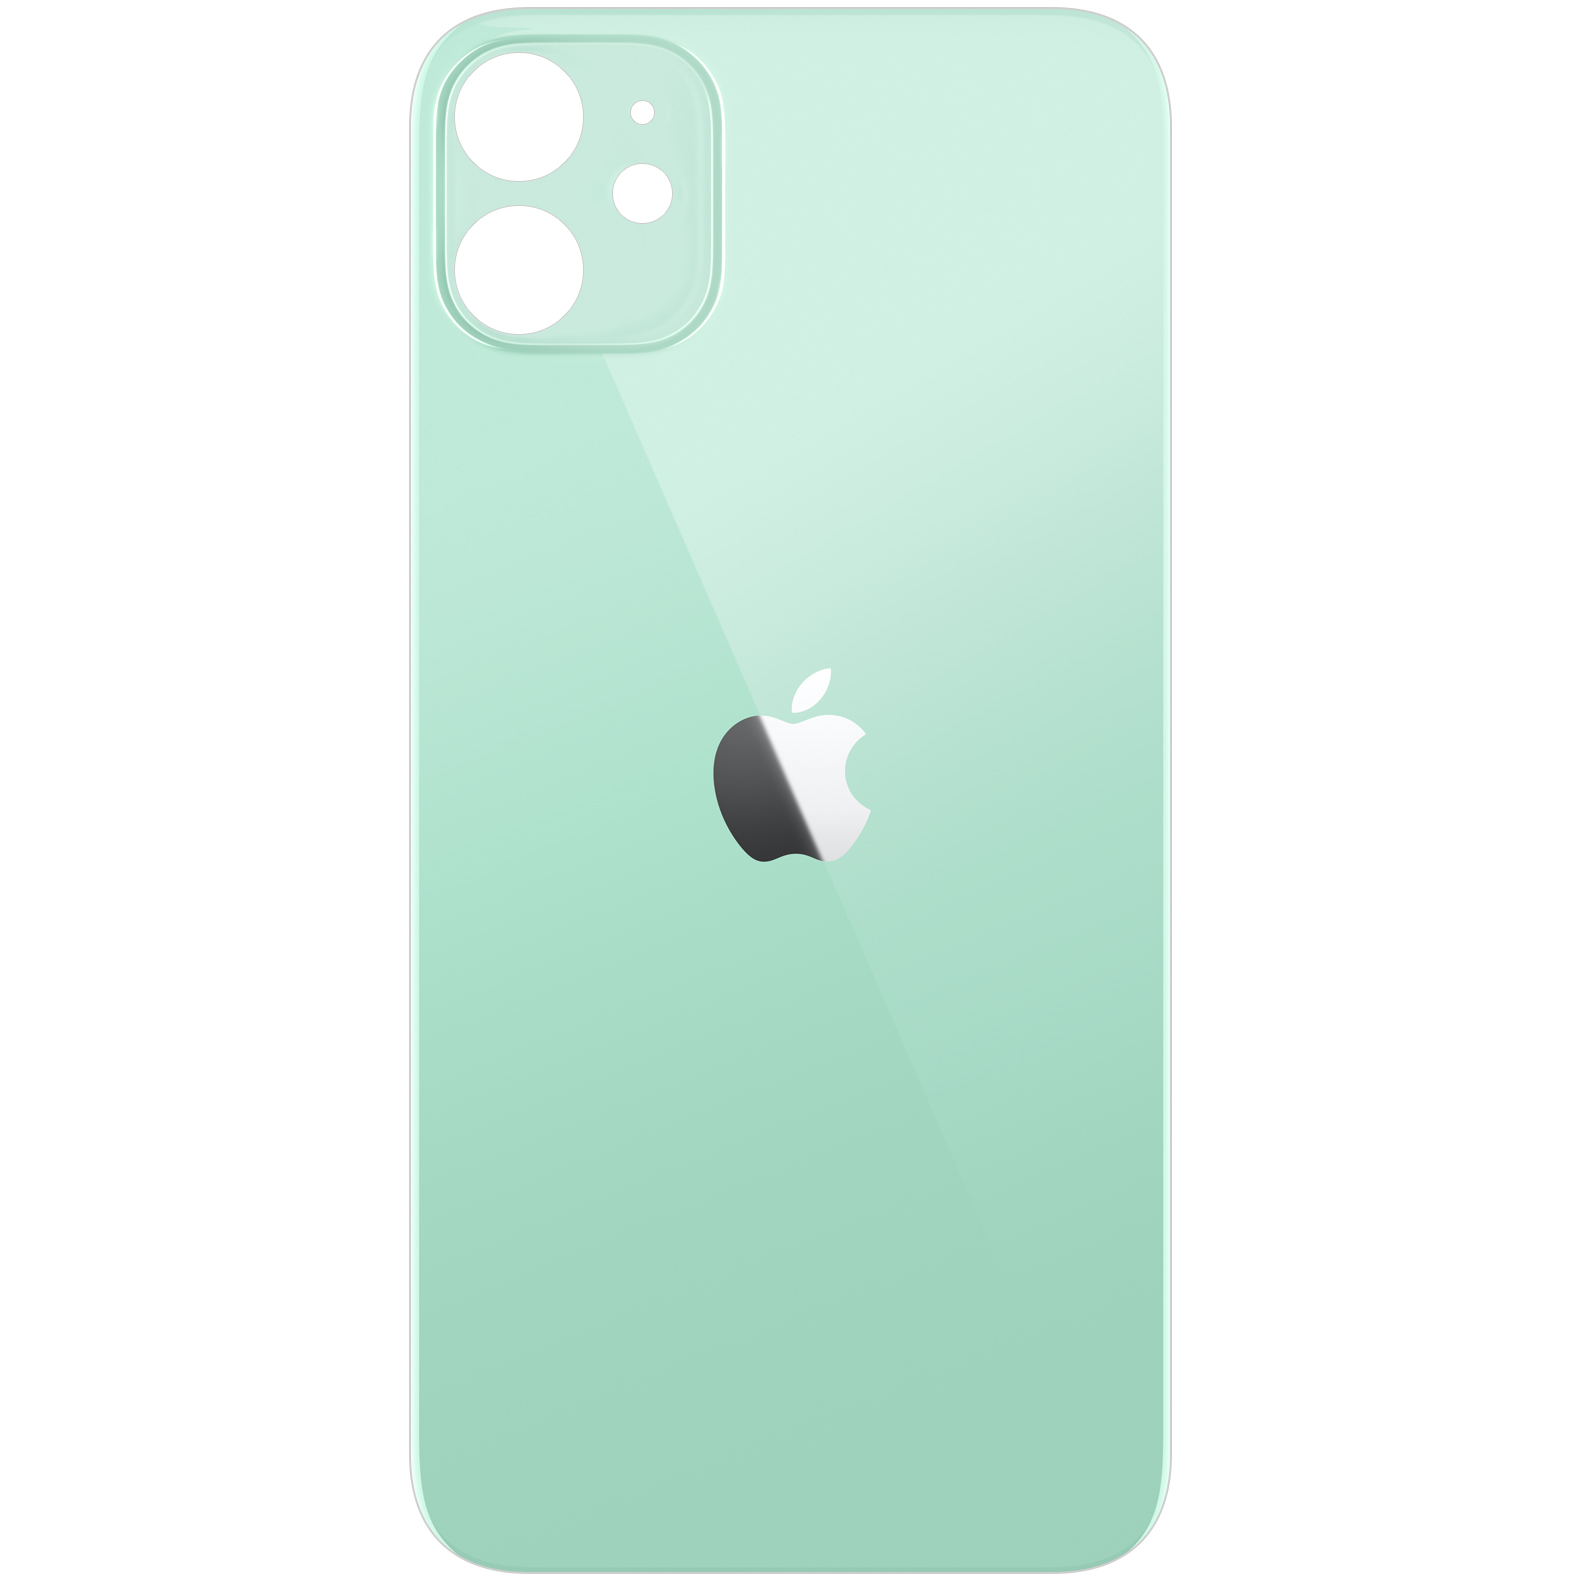 Задний крышка айфон купить. Iphone 11 задняя крышка. Задняя крышка iphone 11 оригинал. Задняя крышка iphone 11 зеленая. Задняя крышка айфон 11 зеленый.